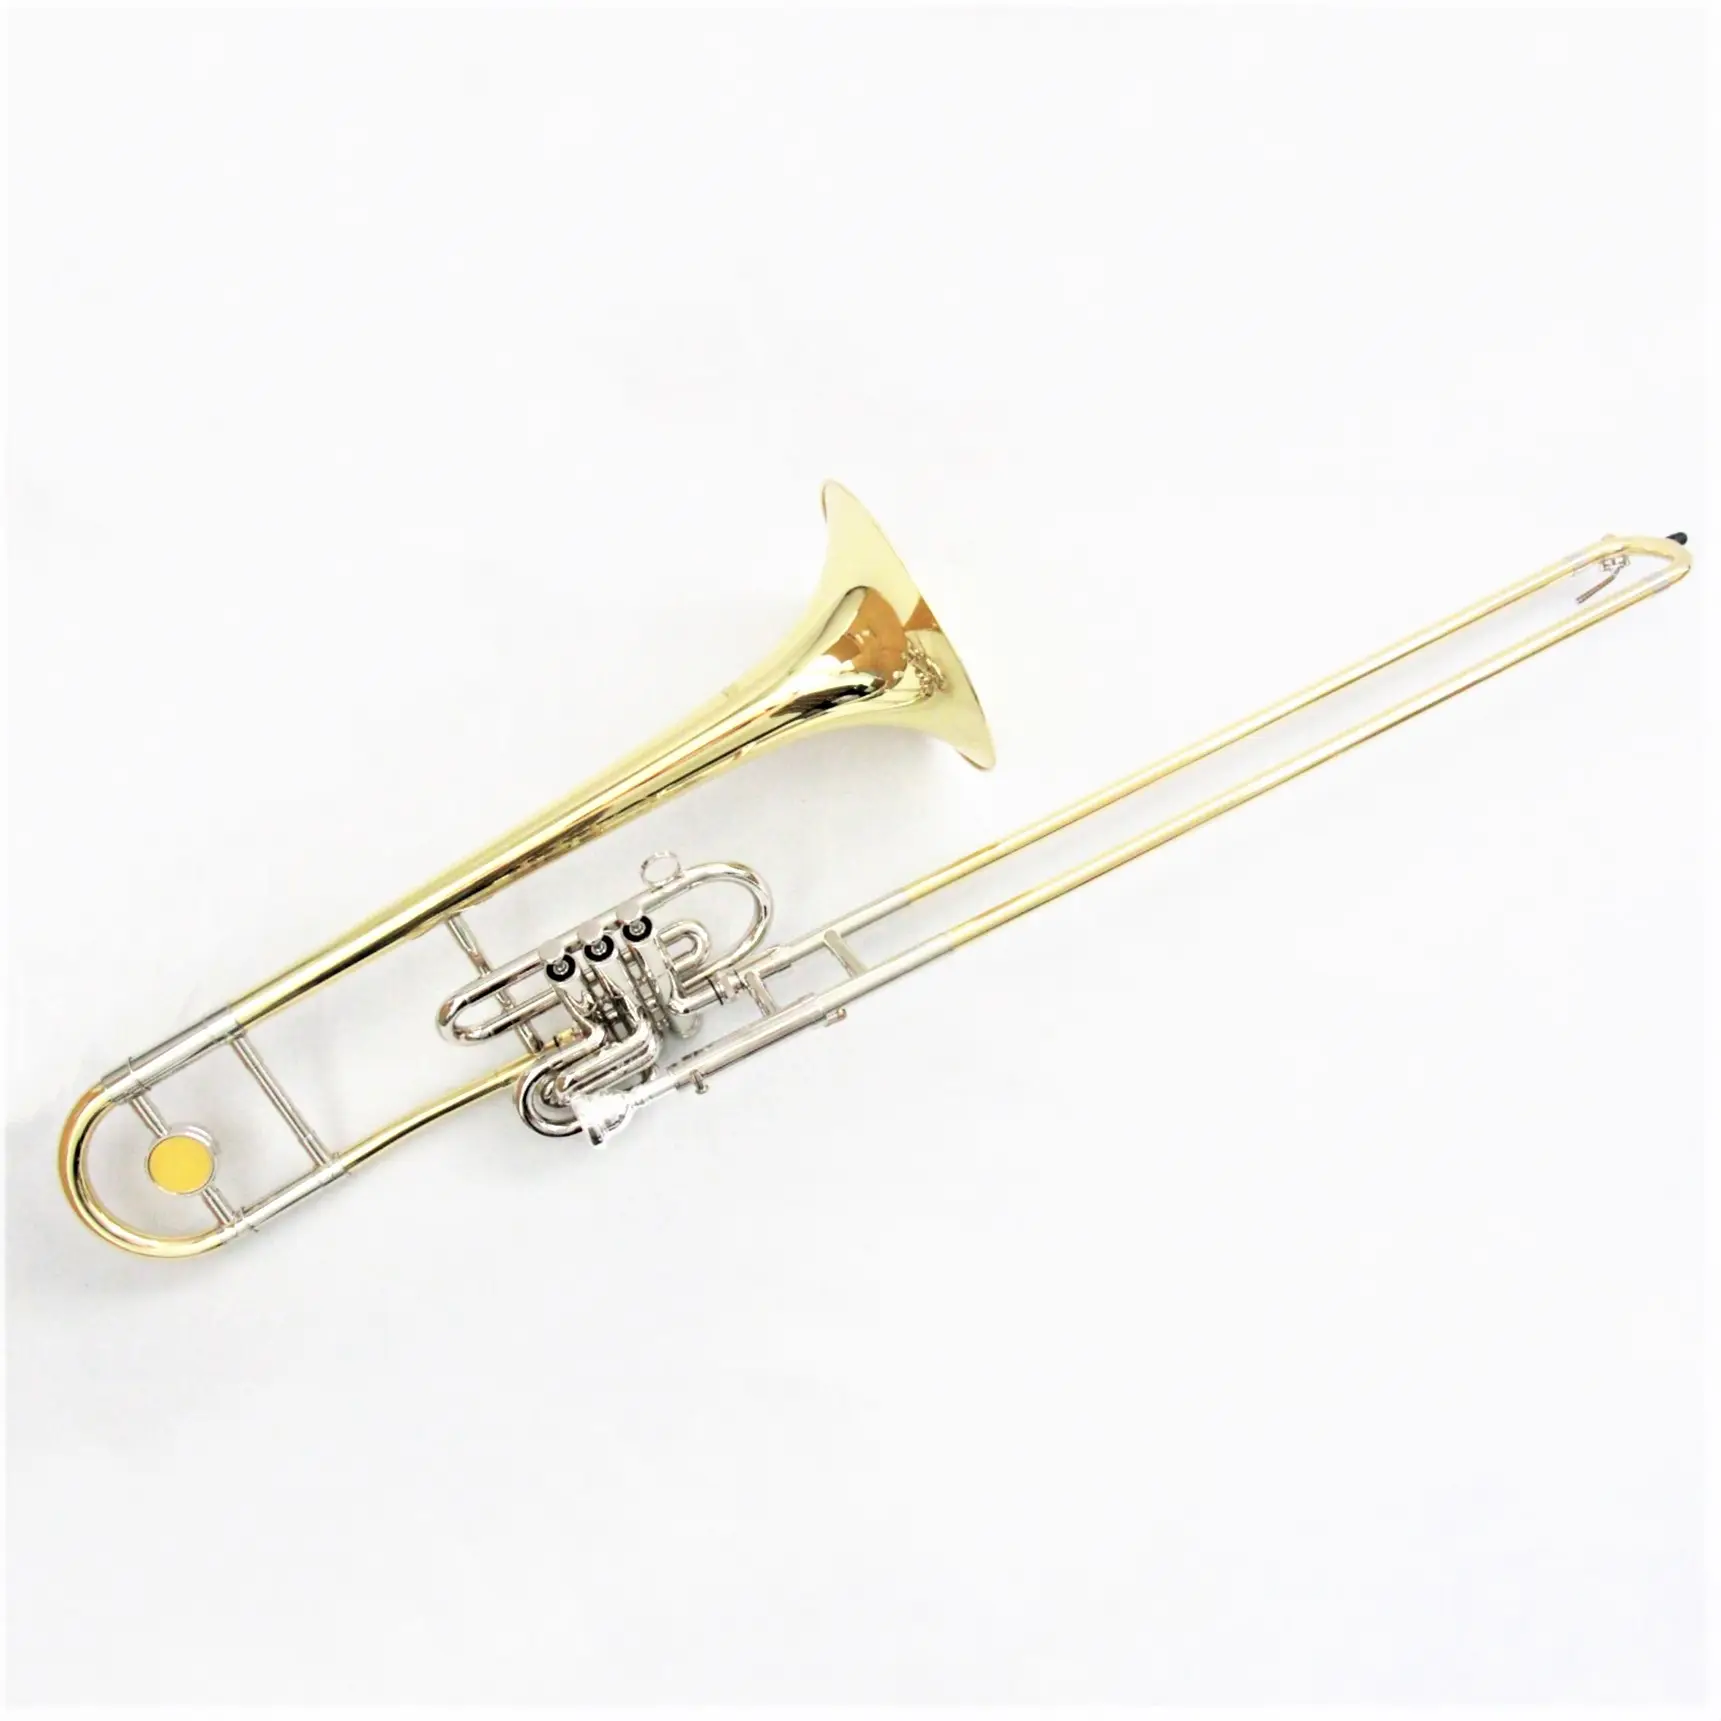 Bb/F professionale trombone valvola a pistone di fascia alta trombone anfibio trombone professionale